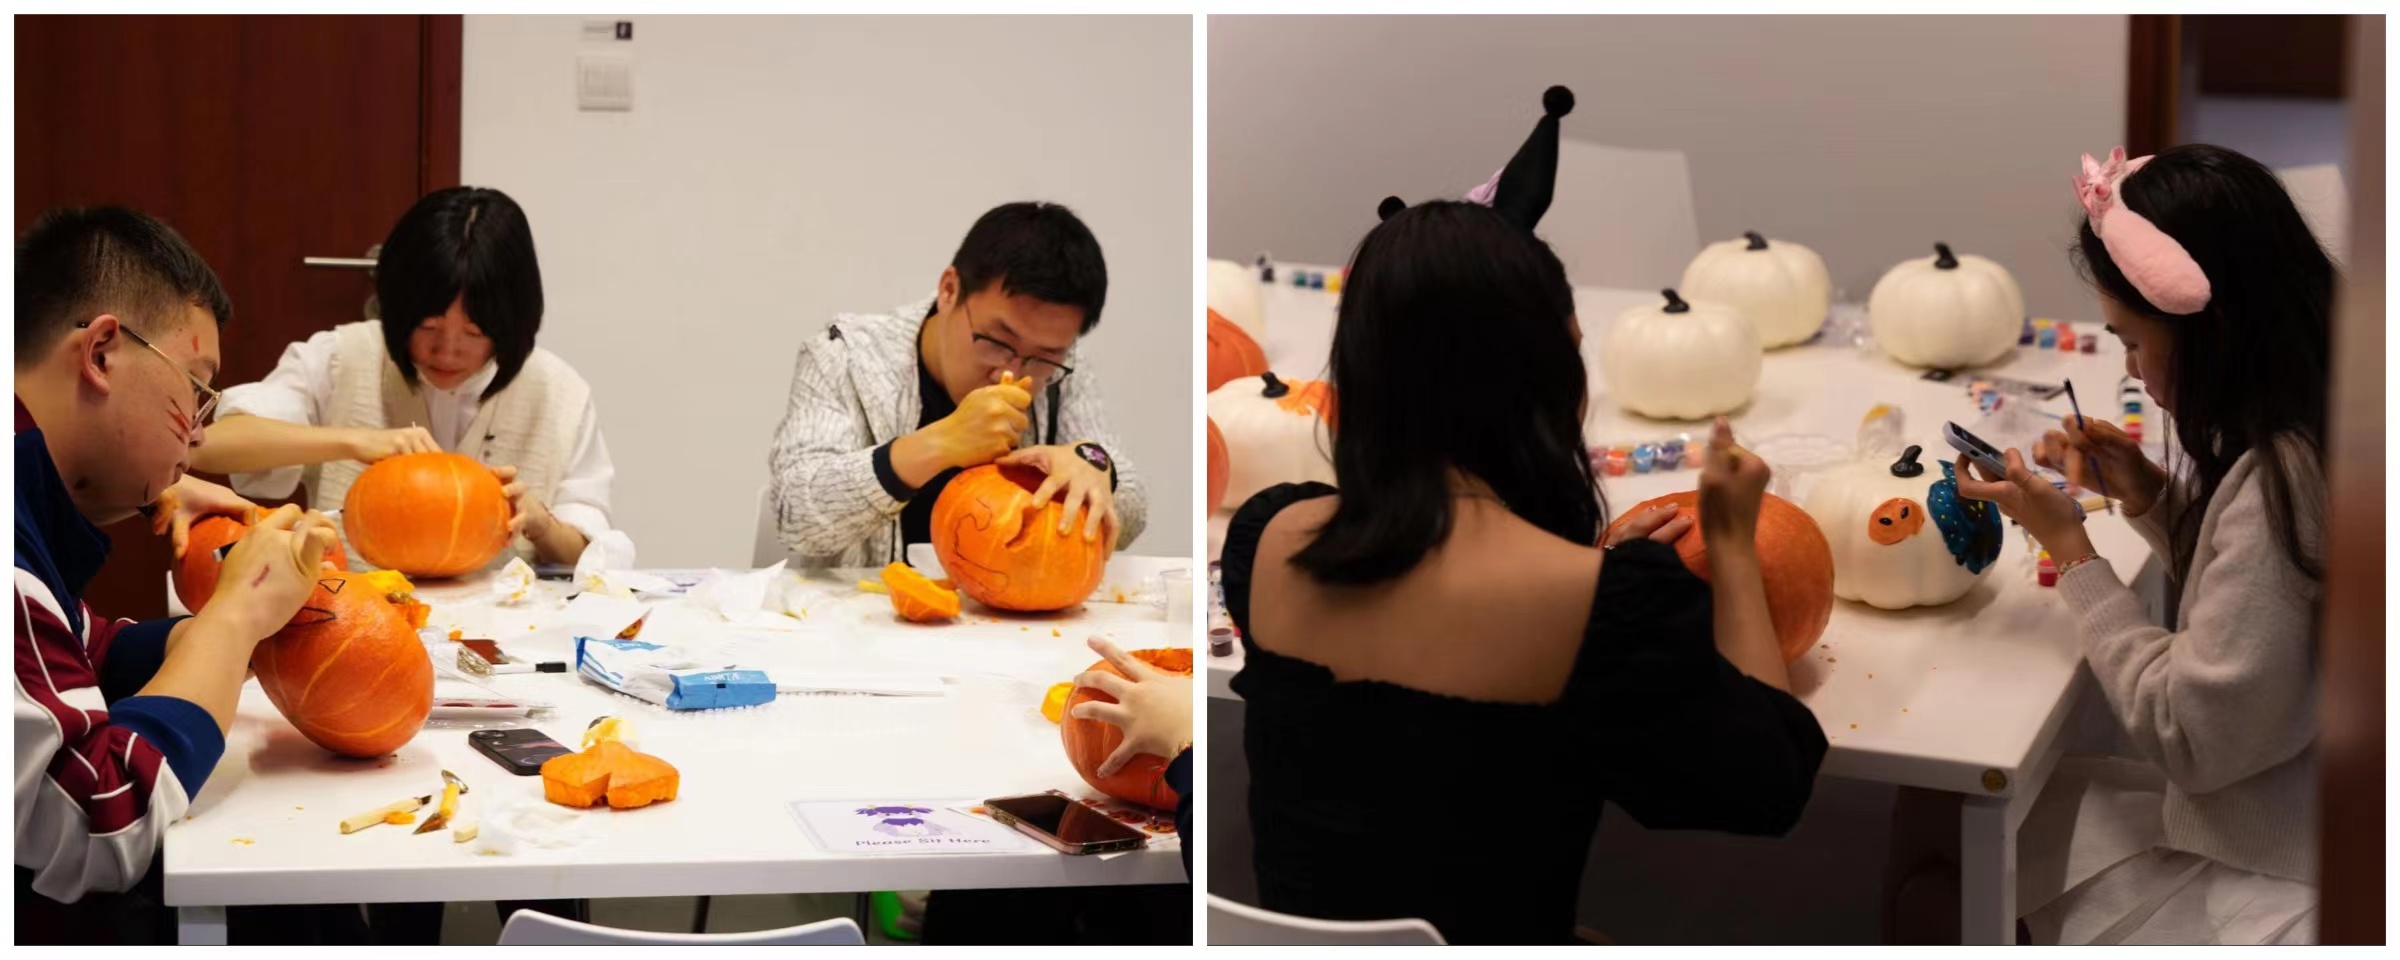 Left: students carving pumpkins. Right: students painting pumpkins